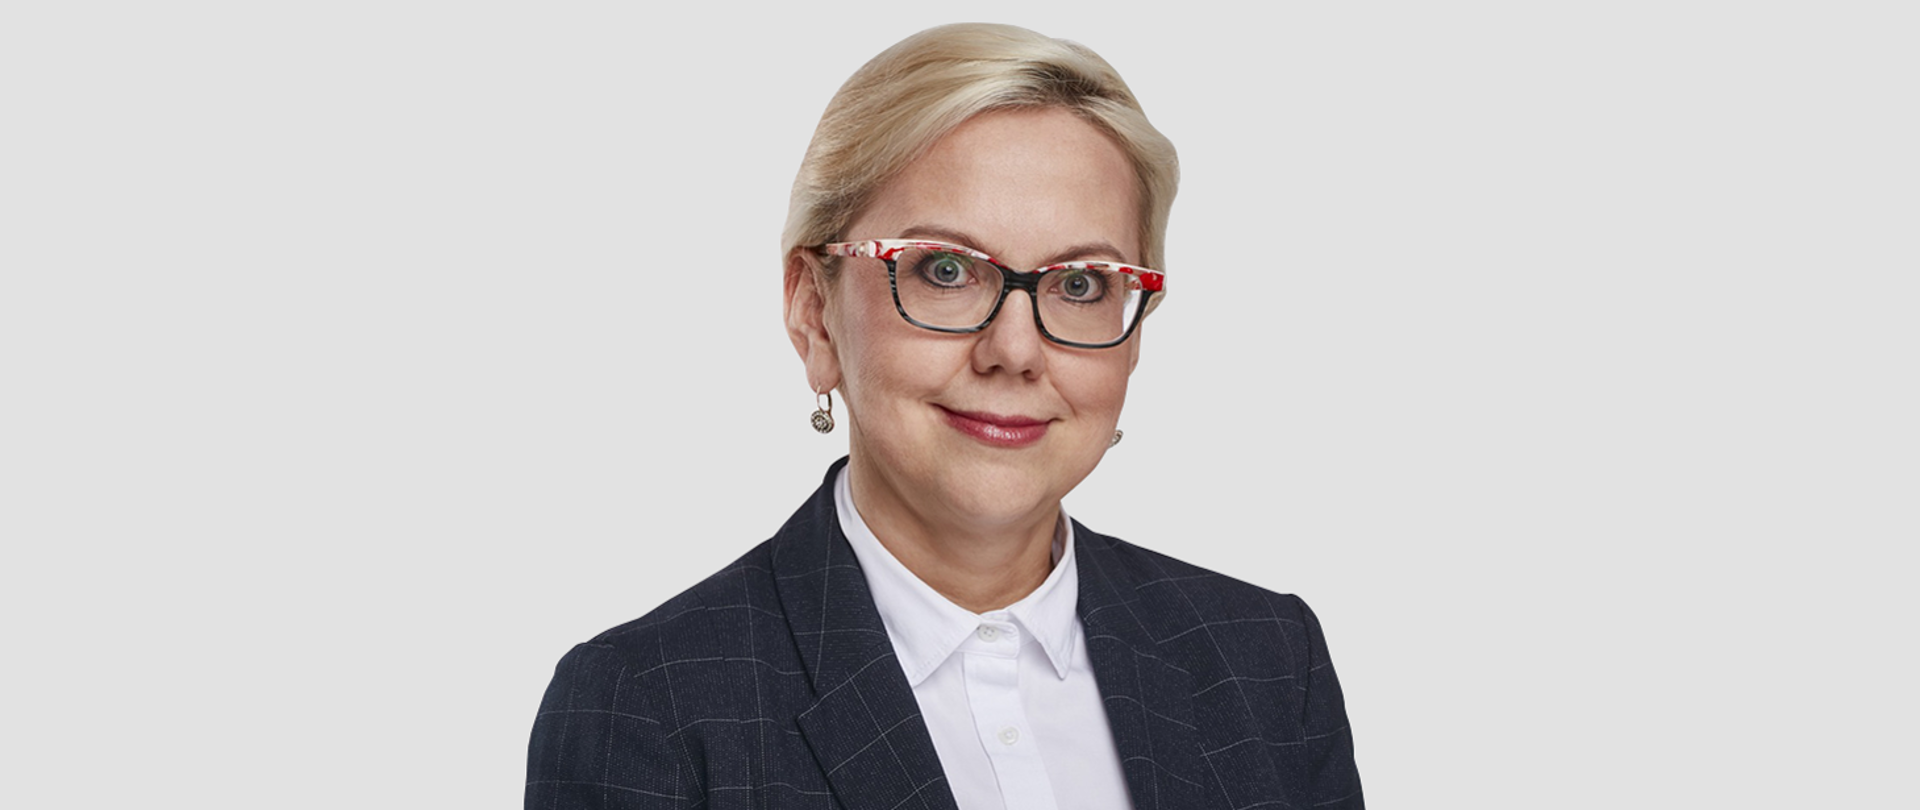 Anna Moskwa Minister Klimatu i Środowiska